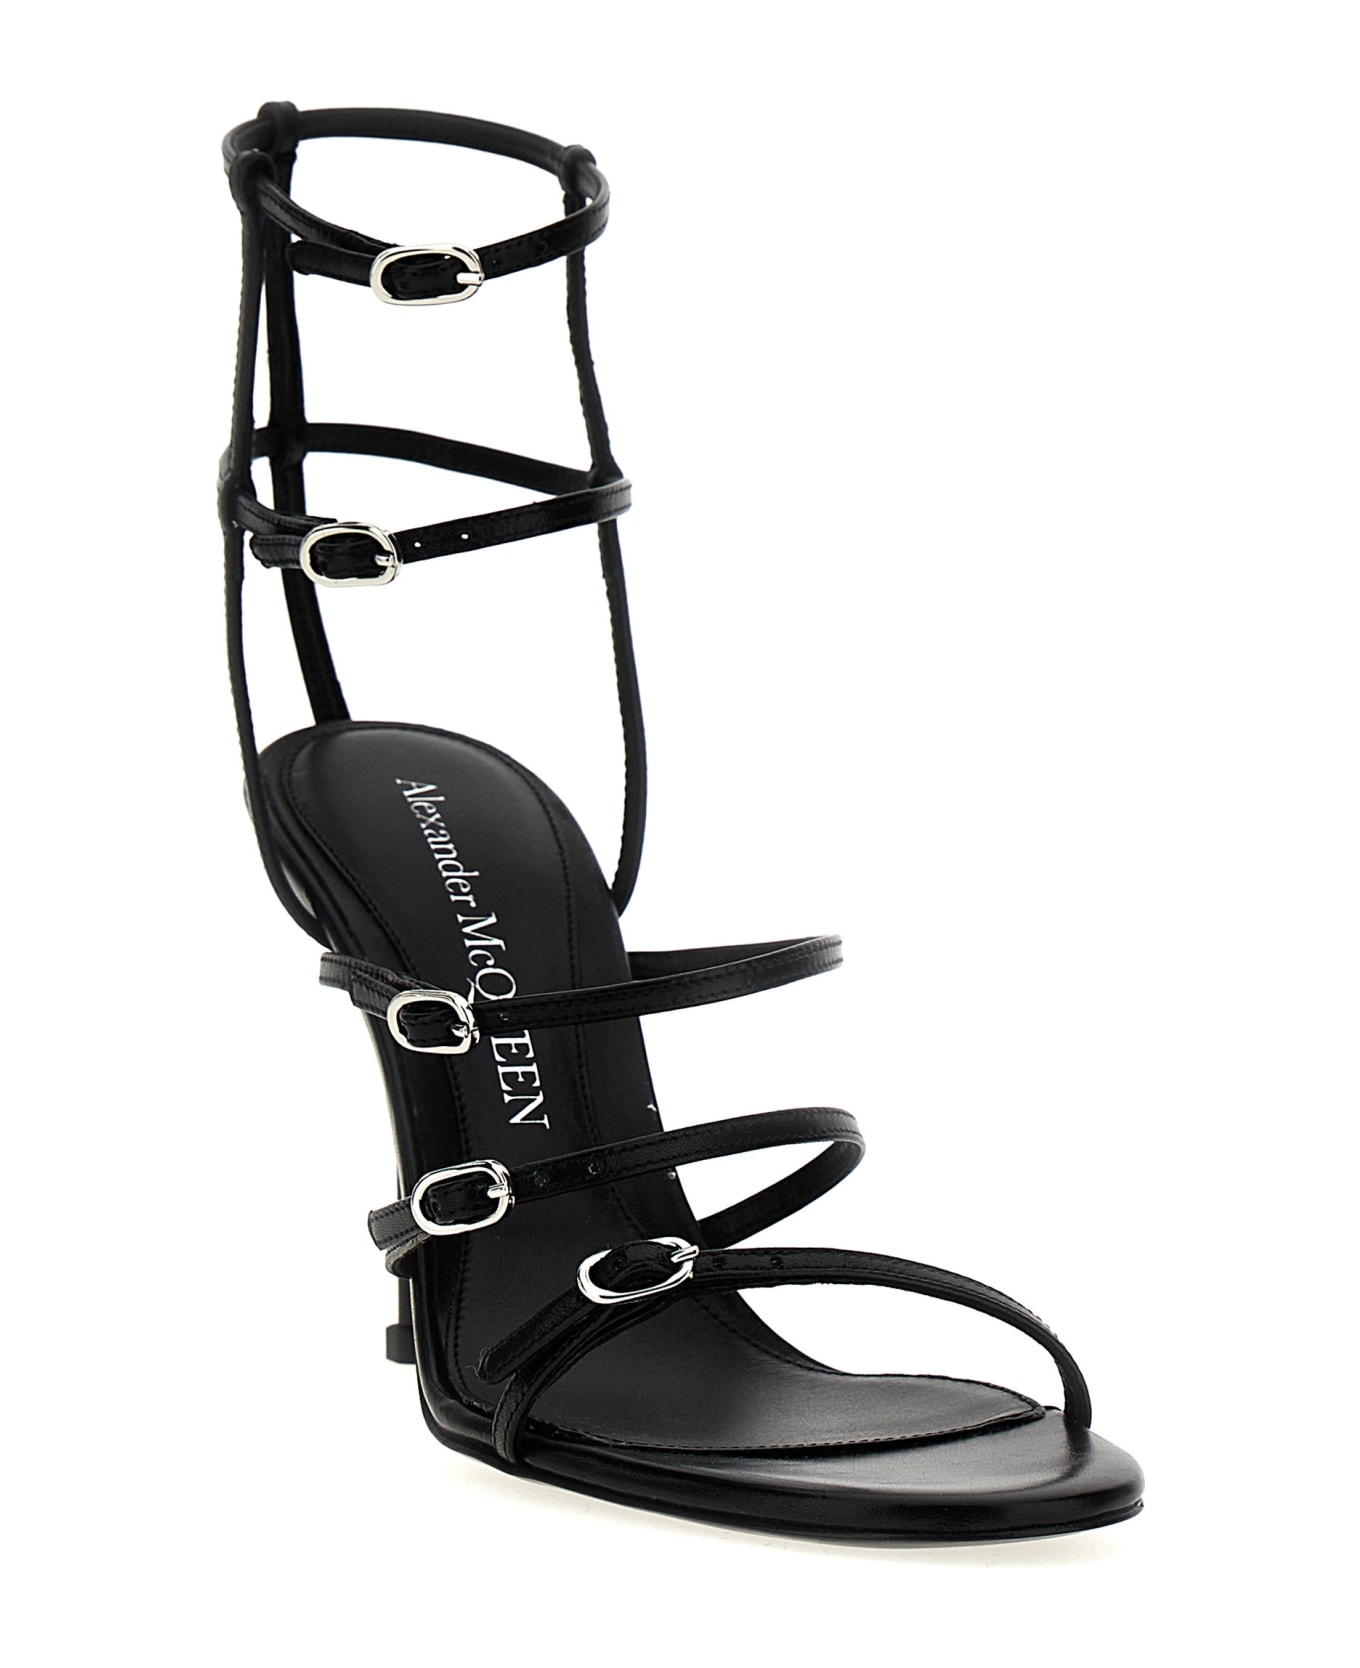 Alexander McQueen Strap Leather Sandals - Black サンダル